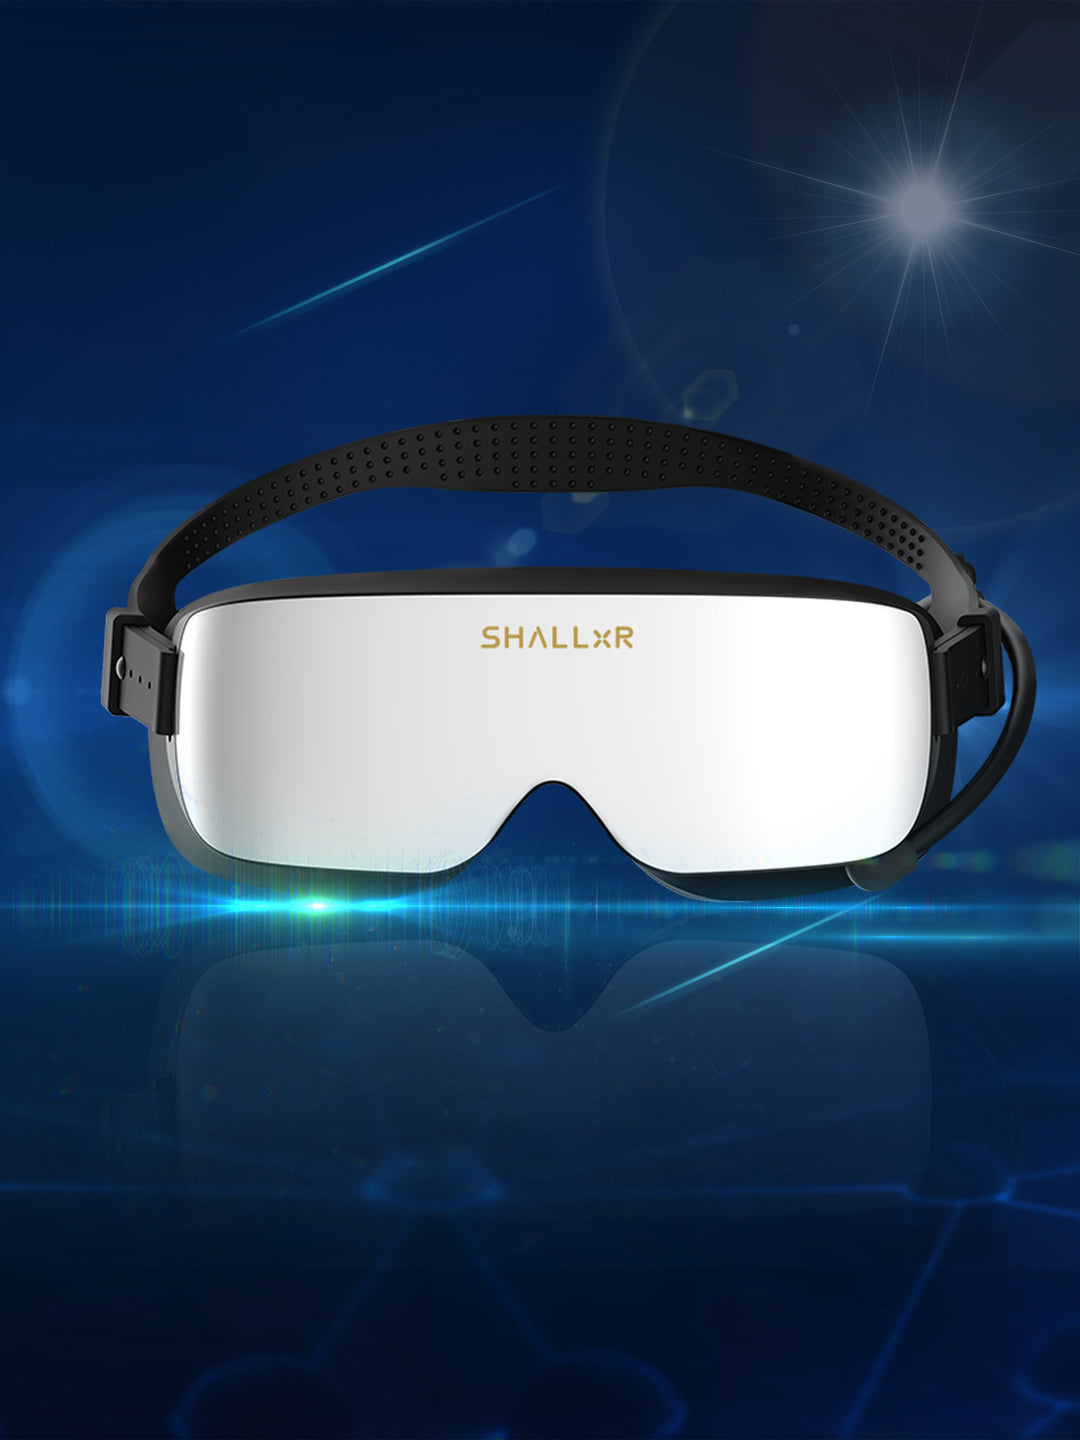 ShallxR 3 Lightweight VR Headset